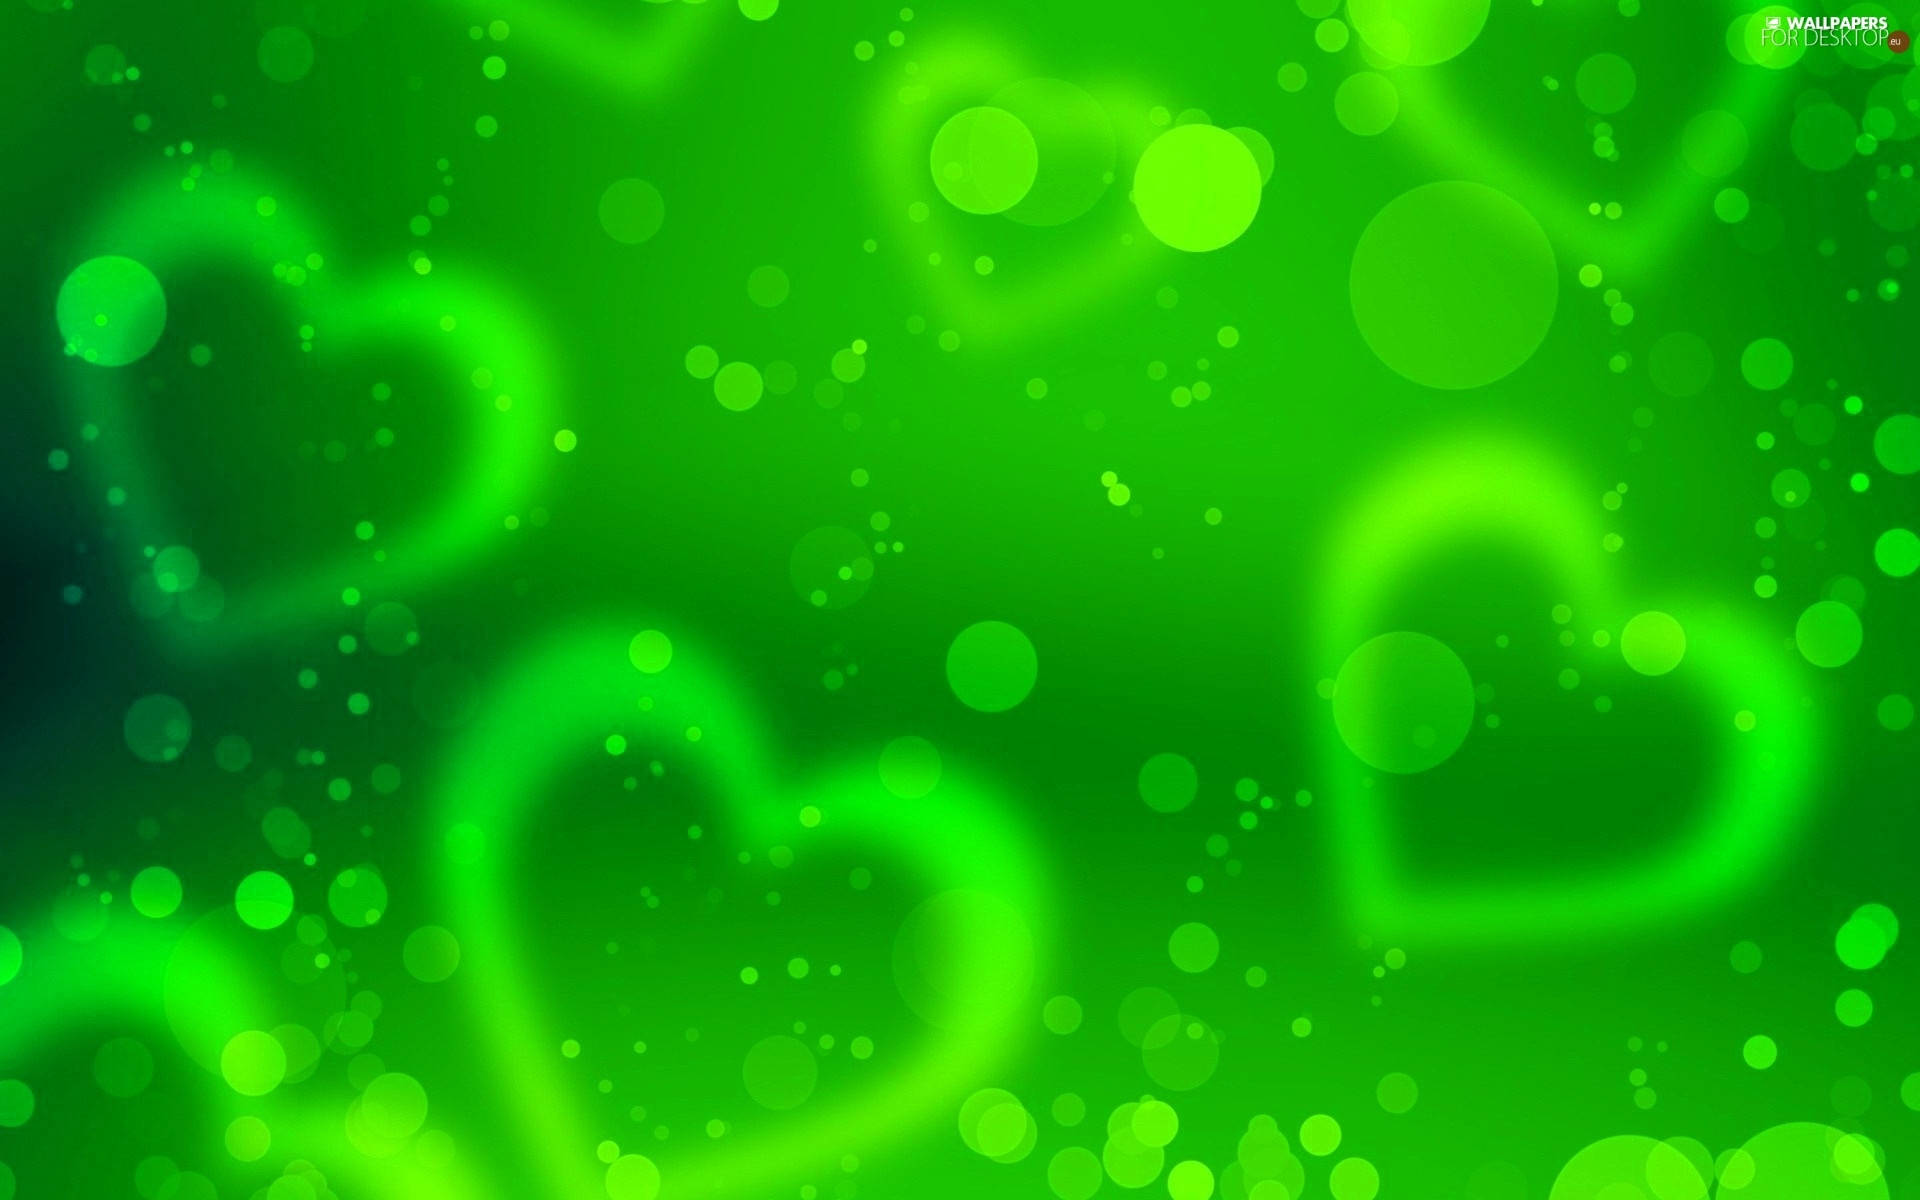 green heart wallpapers